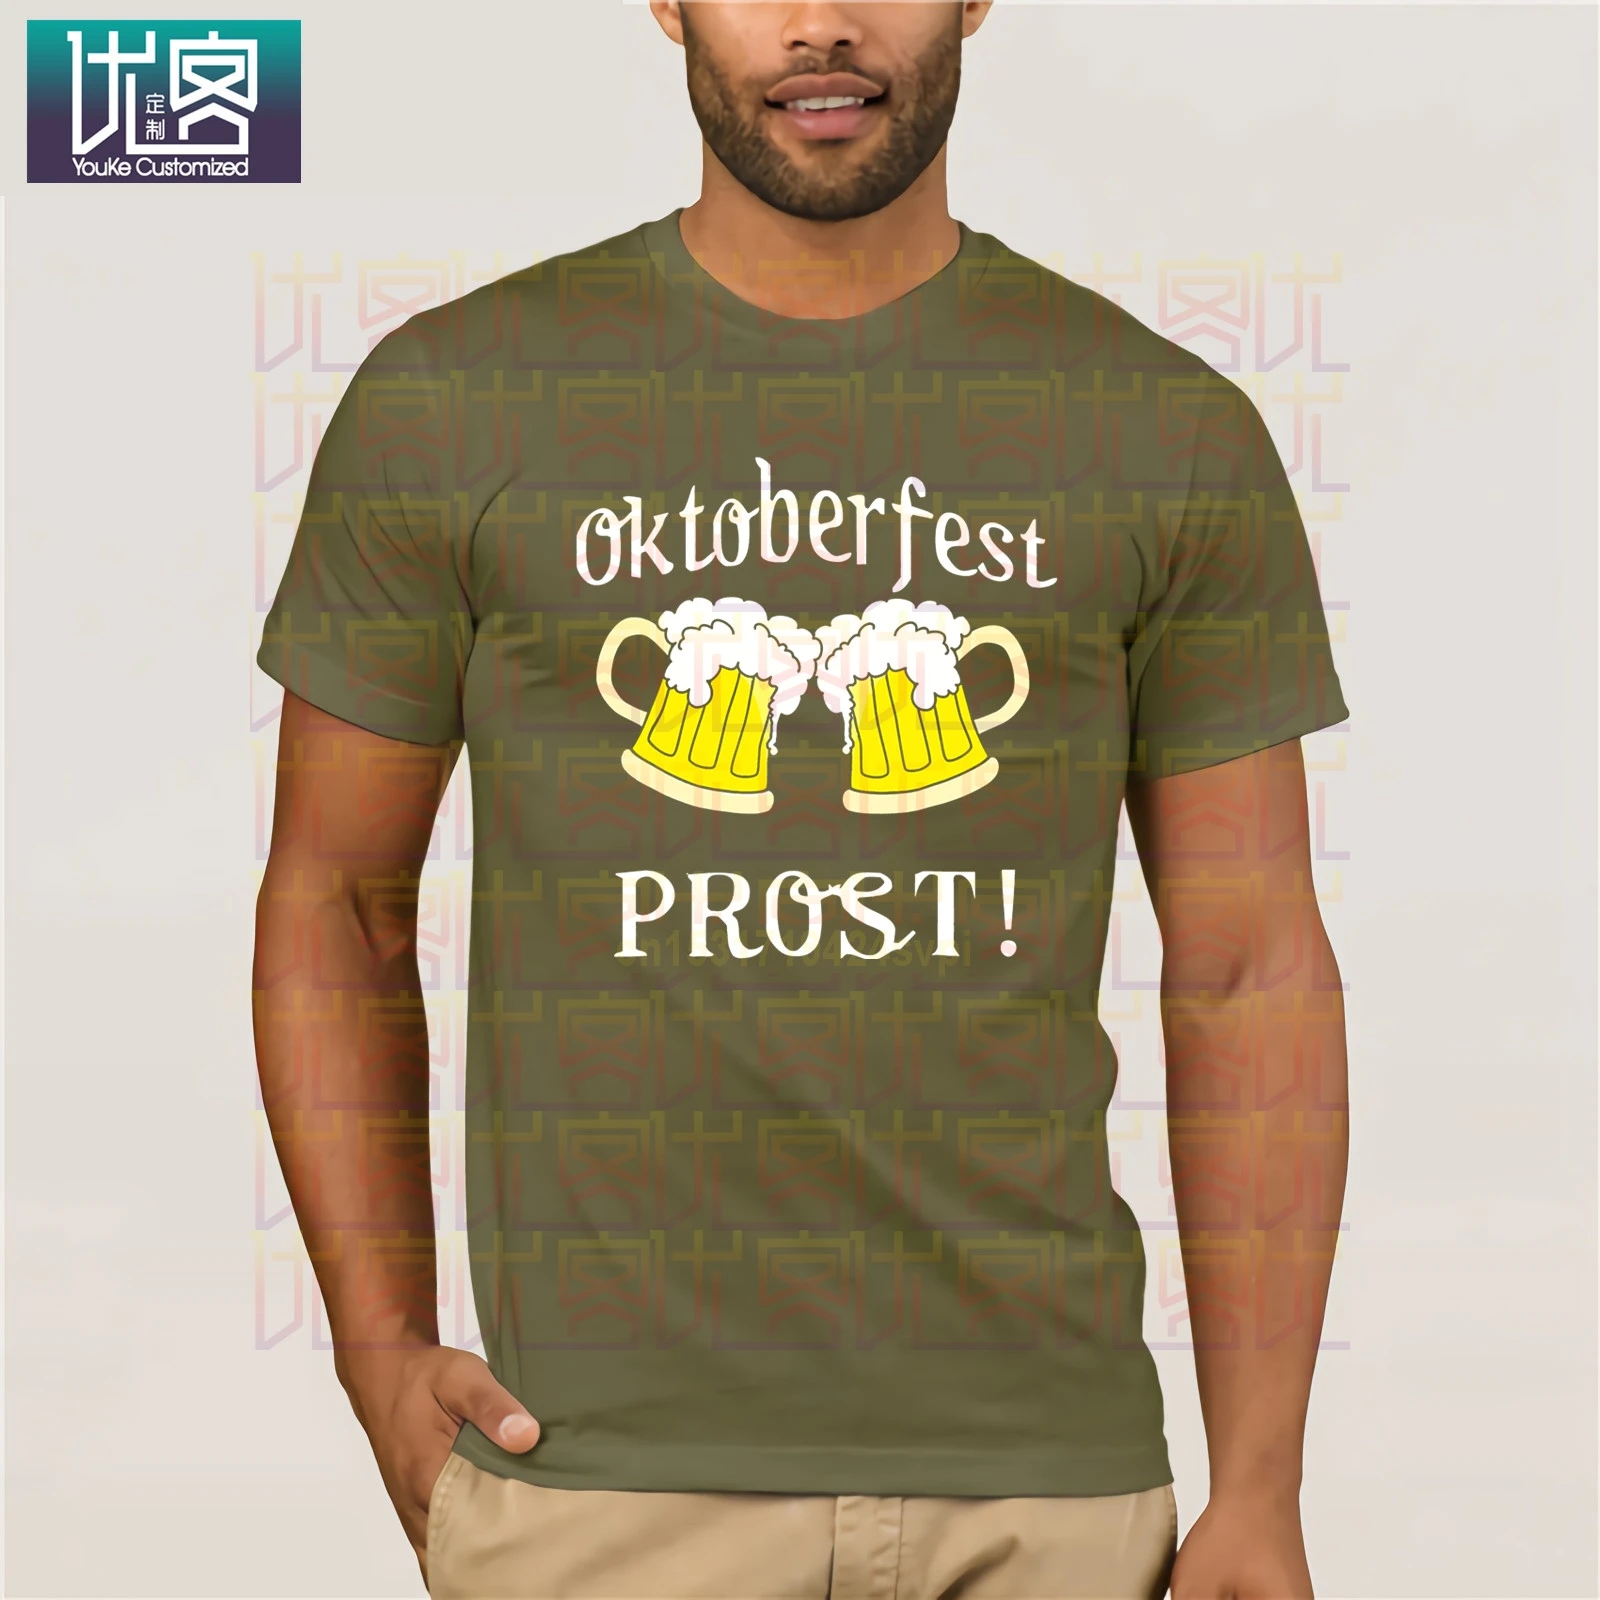 

Cool OktoberfesT-Drinking ShirT-Funny German Beer Men T Shirt 2020 Summer Fashion Humor Tee Shirt 100% Cotton Tops Graphic